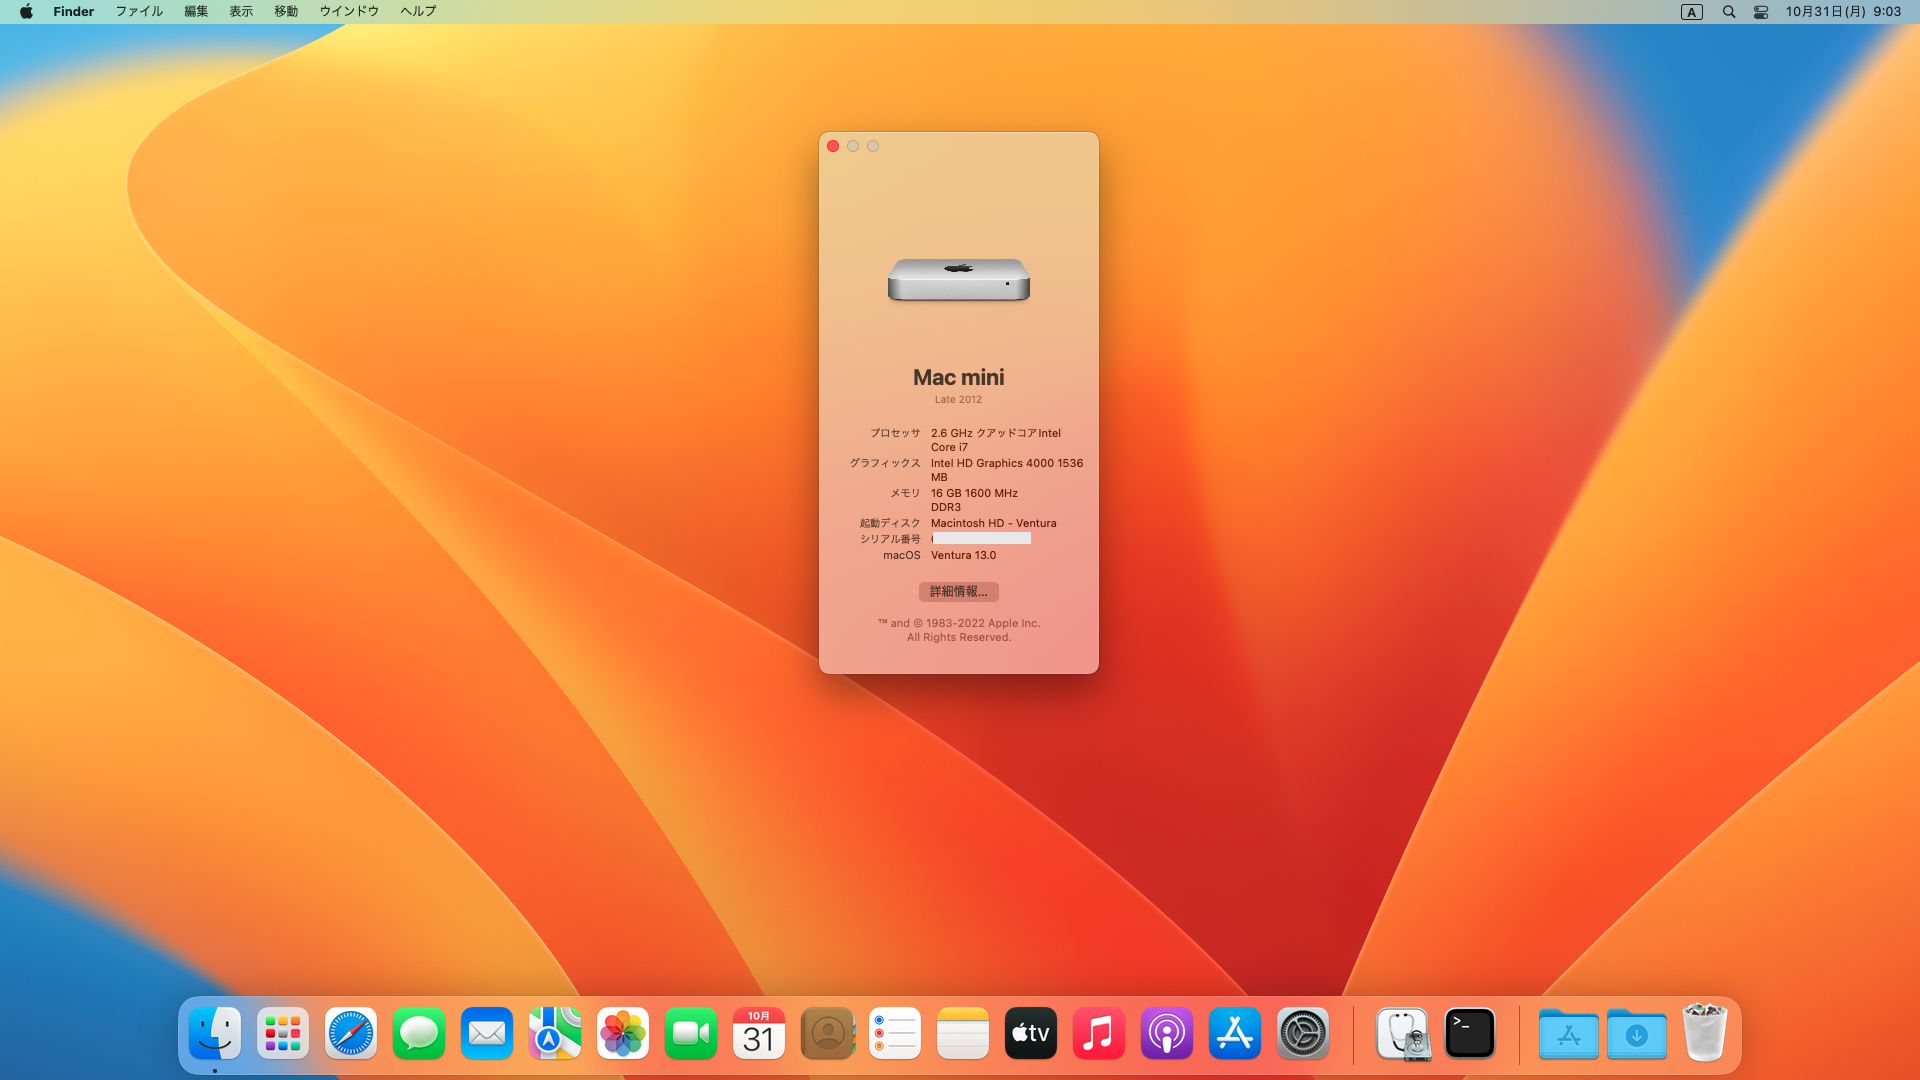 macOS Ventura on Mac mini late 2012